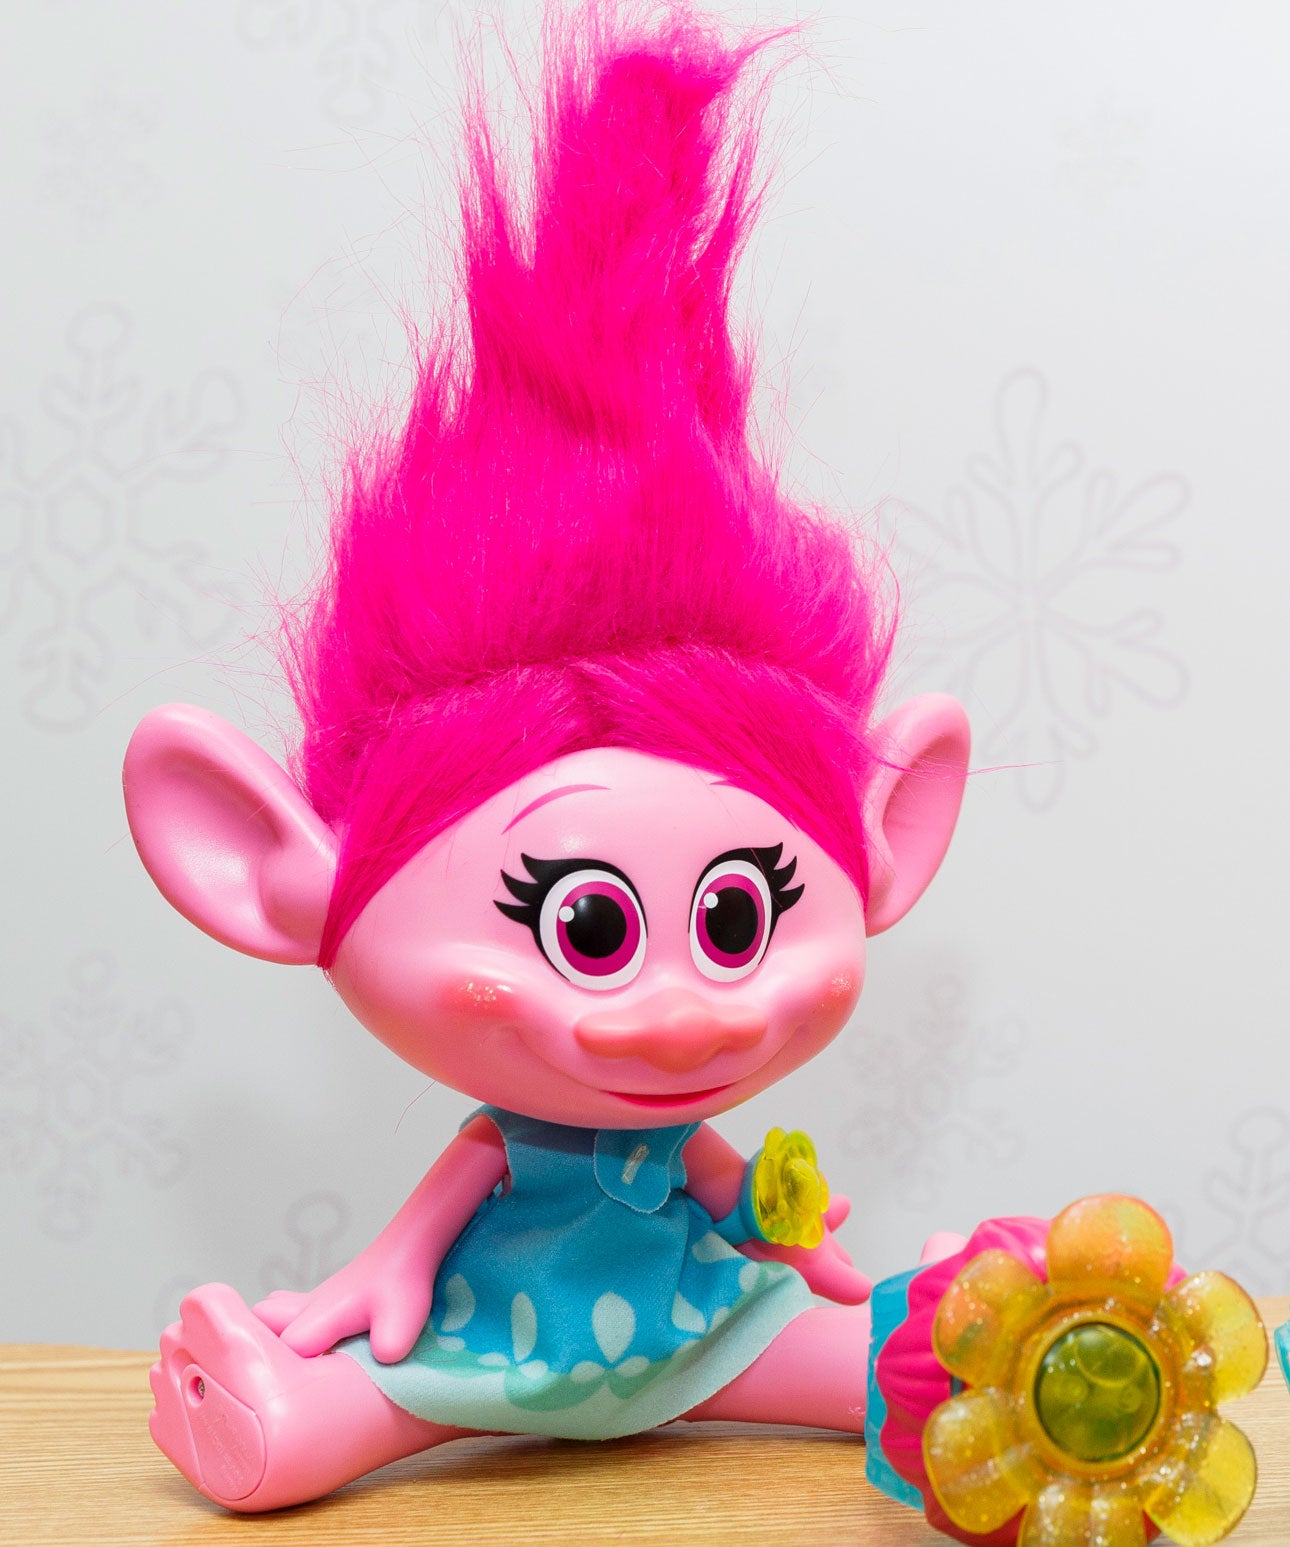 Cartoon Trolls Movie Action Figure Toys Hair Plush Poppy Dolls Plastic Puppets 